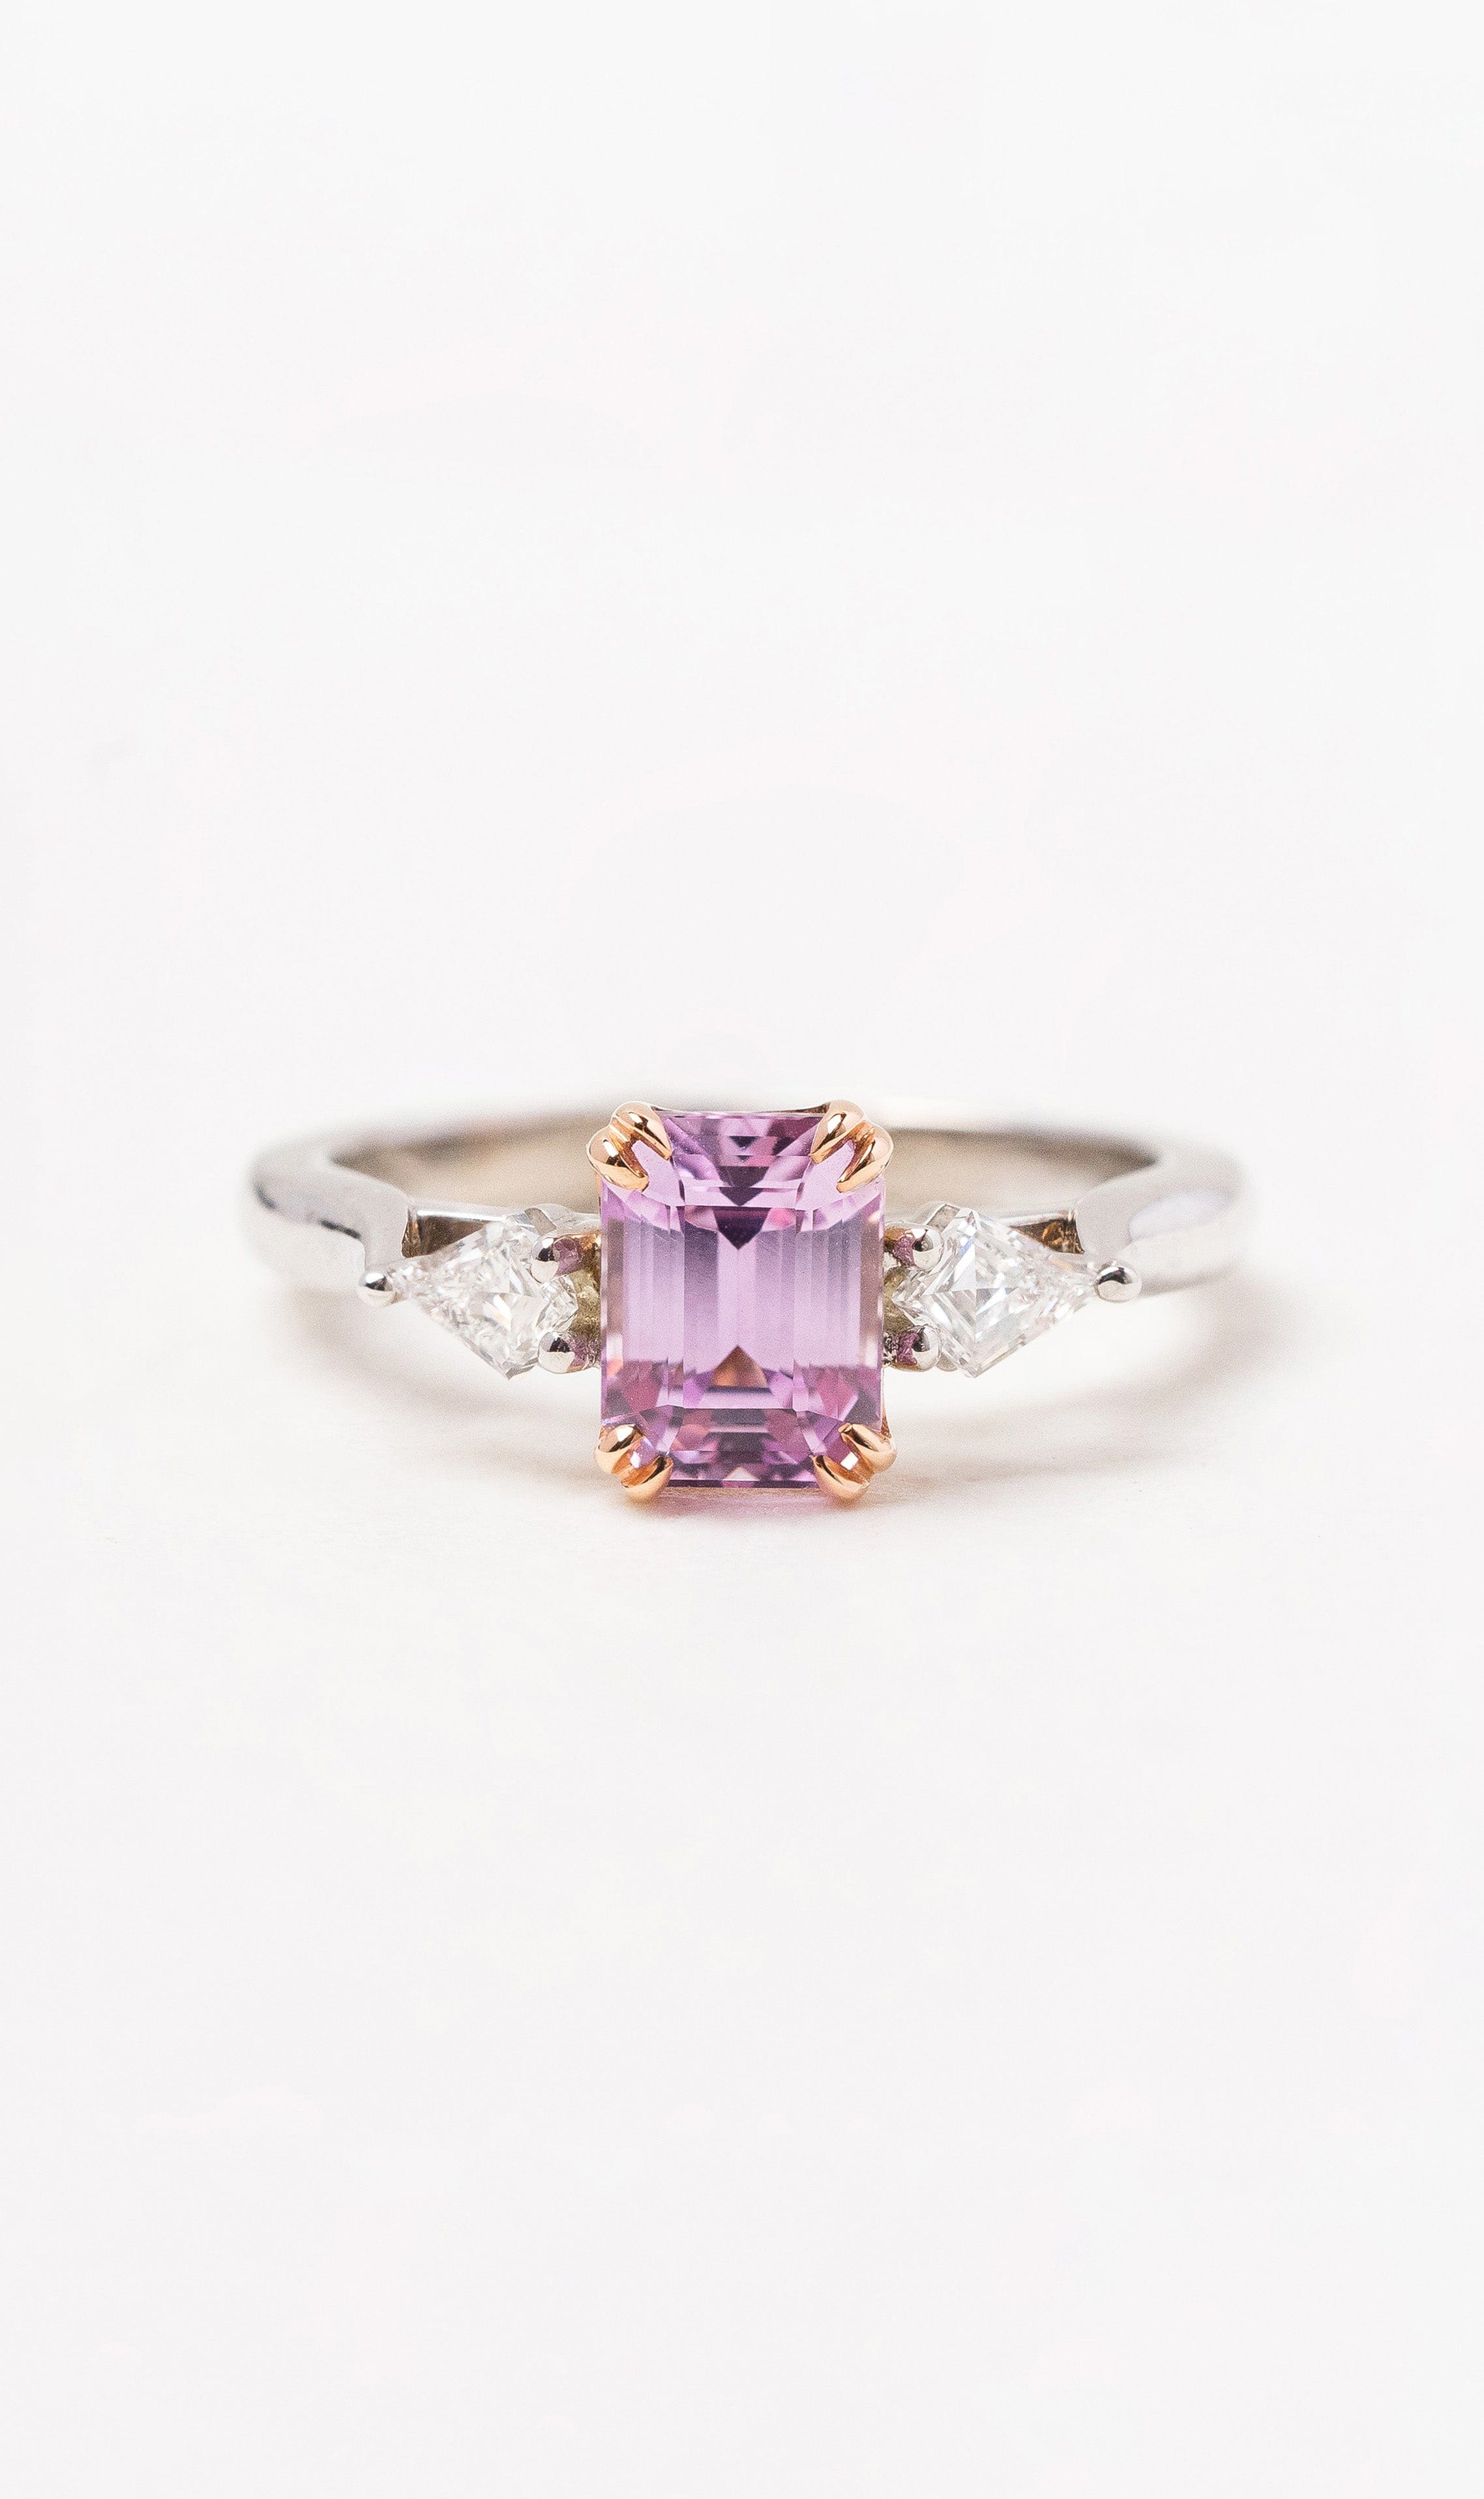 Hogans Family Jewellers 18K WRG Emerald Cut Pink Sapphire Ring